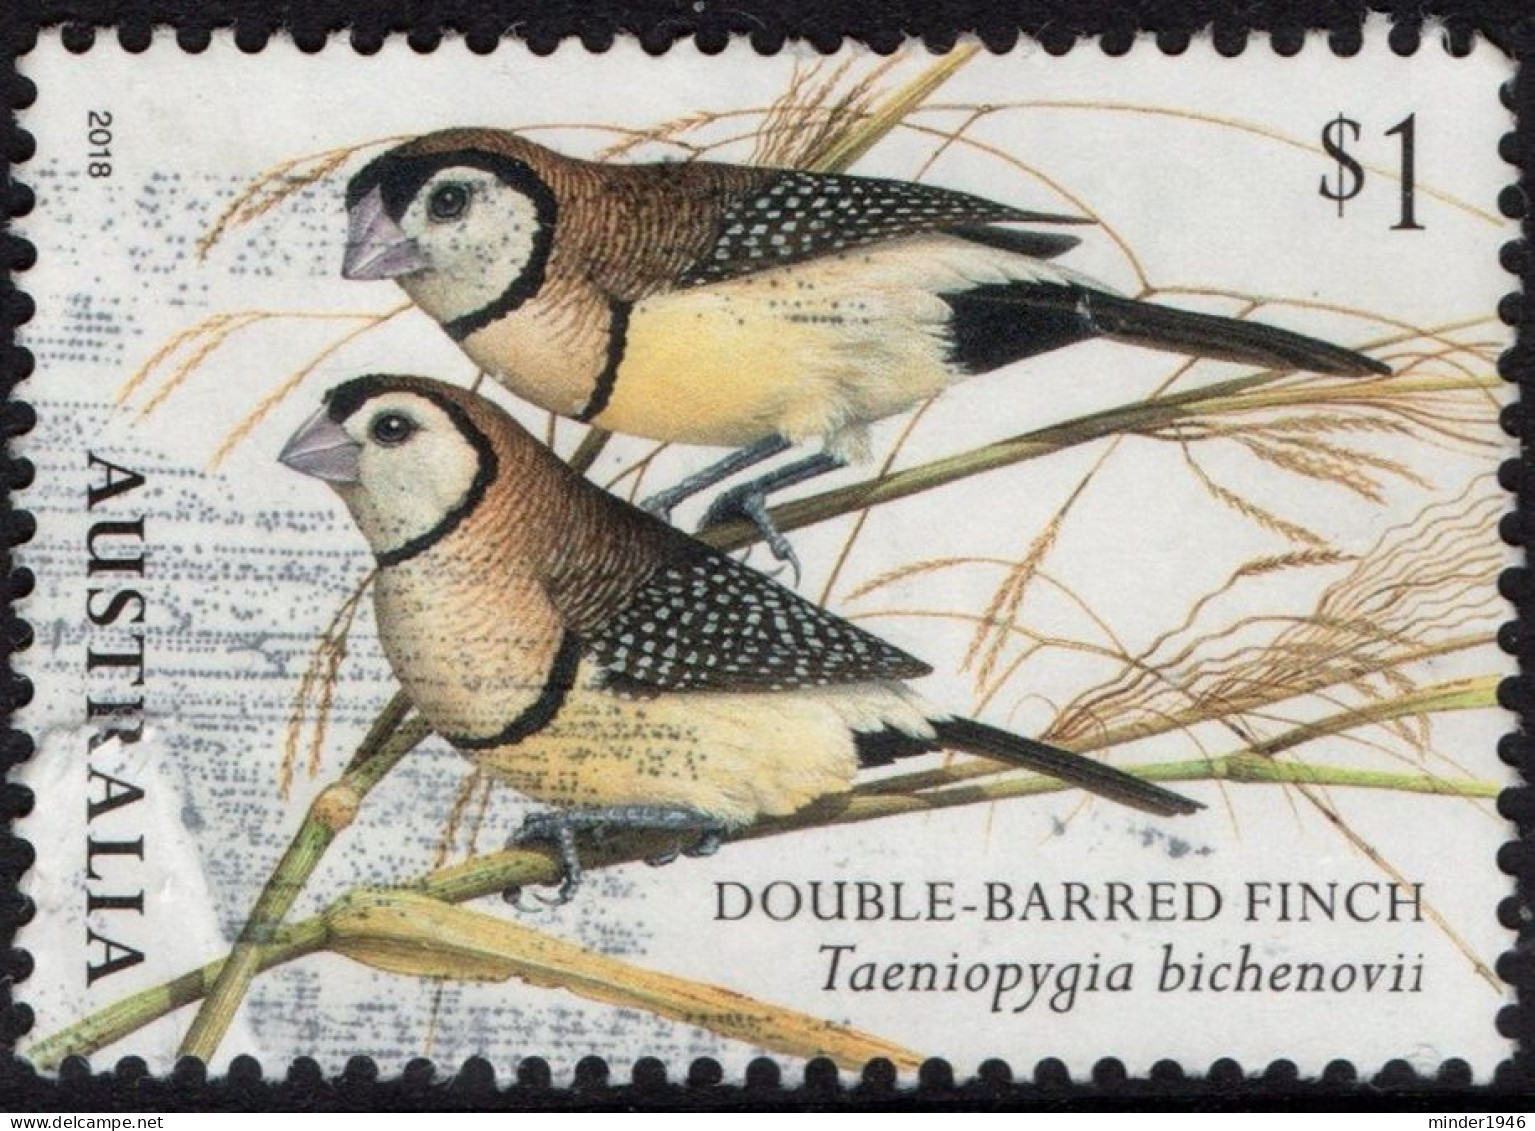 AUSTRALIA 2018 $1 Multicoloured, Birds - Finches Of Australia-Double Barrel Finch Used - Gebraucht